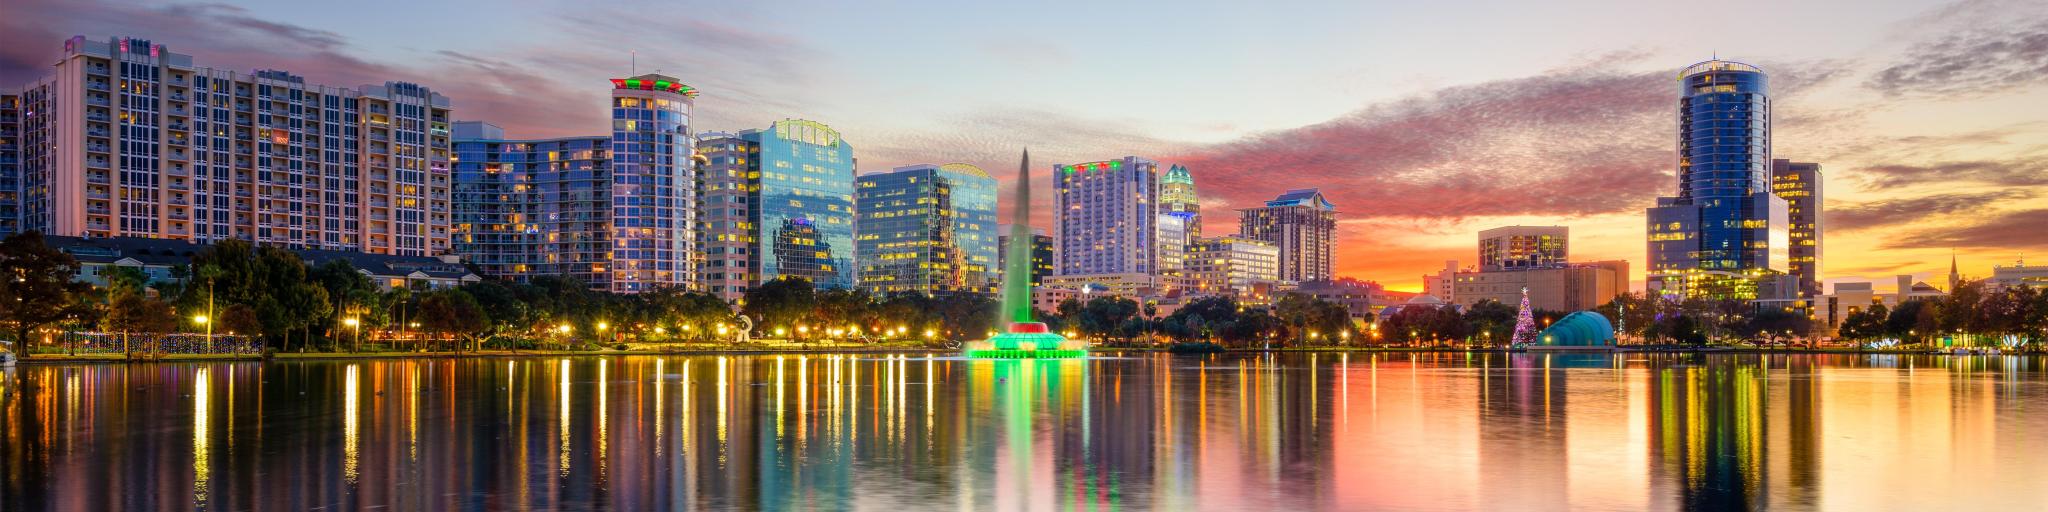 Orlando, Florida, USA downtown city skyline on Eola Lake taken at early evening.